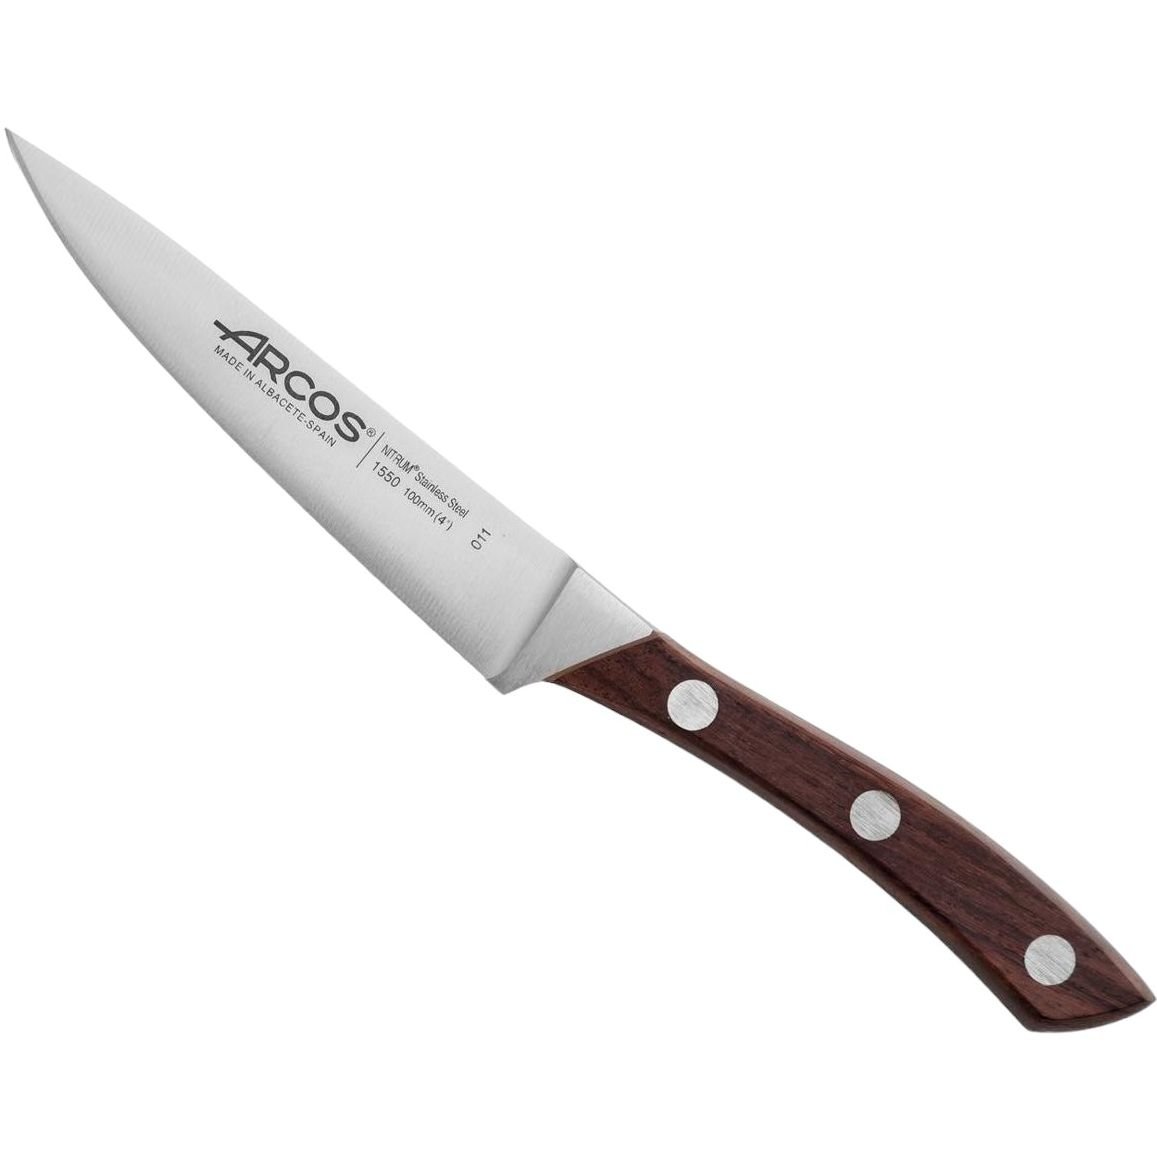 Нож для чистки овощей Arcos 100 мм Коричневый 000266755 - фото 1